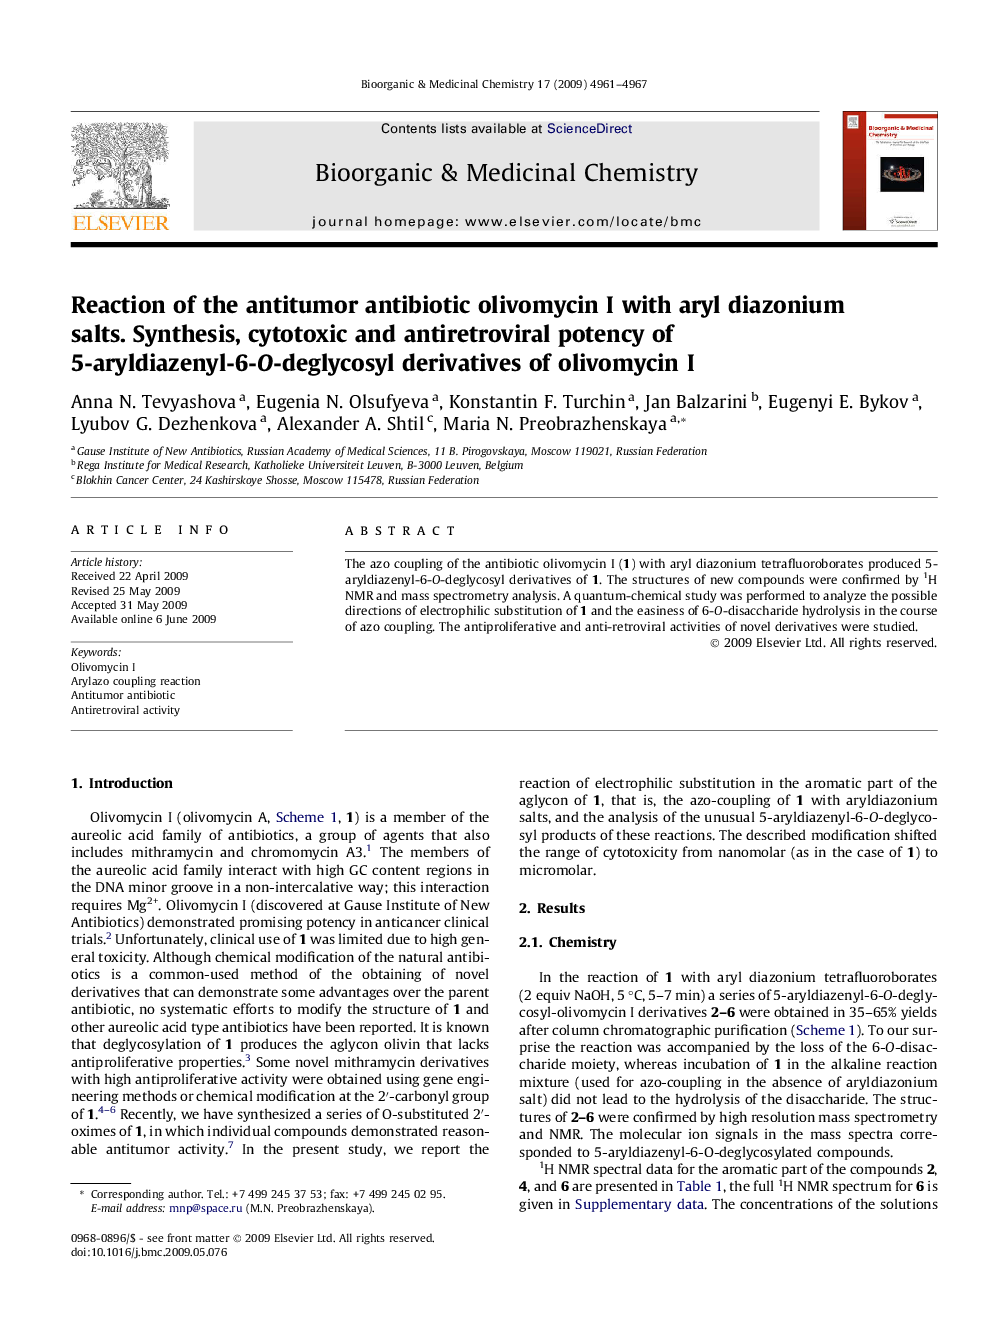 Reaction of the antitumor antibiotic olivomycin I with aryl diazonium salts. Synthesis, cytotoxic and antiretroviral potency of 5-aryldiazenyl-6-O-deglycosyl derivatives of olivomycin I